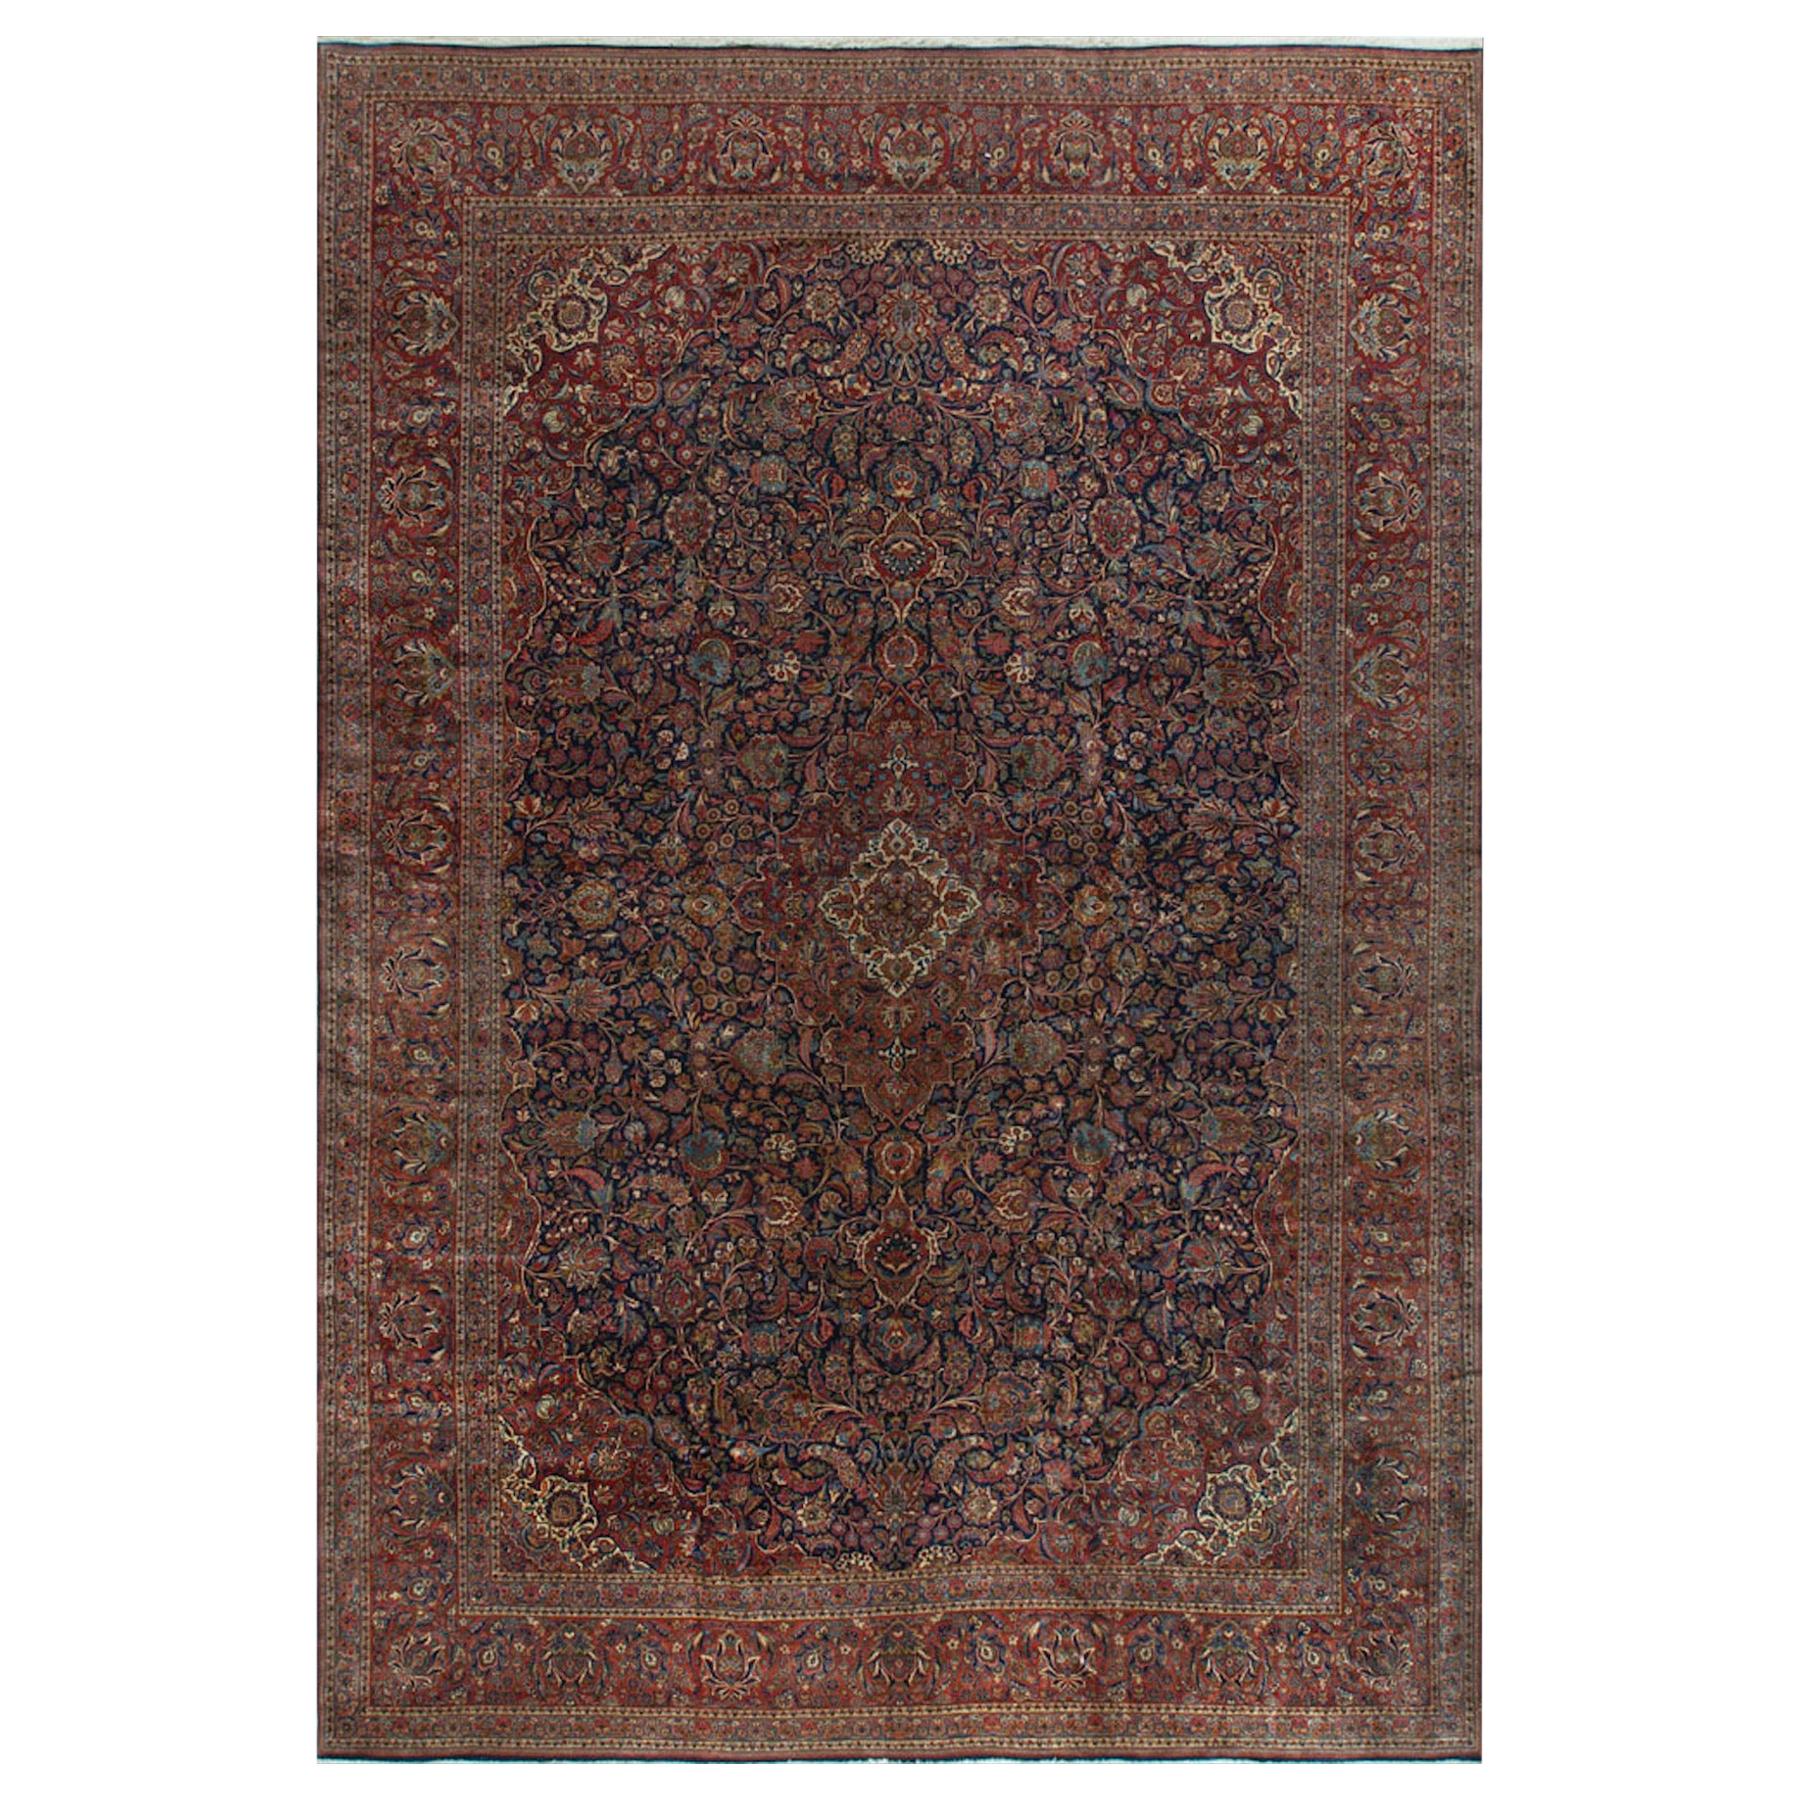 Vintage Oversize Persian Kashan Rug, circa 1920 13'7" x 20'5". For Sale